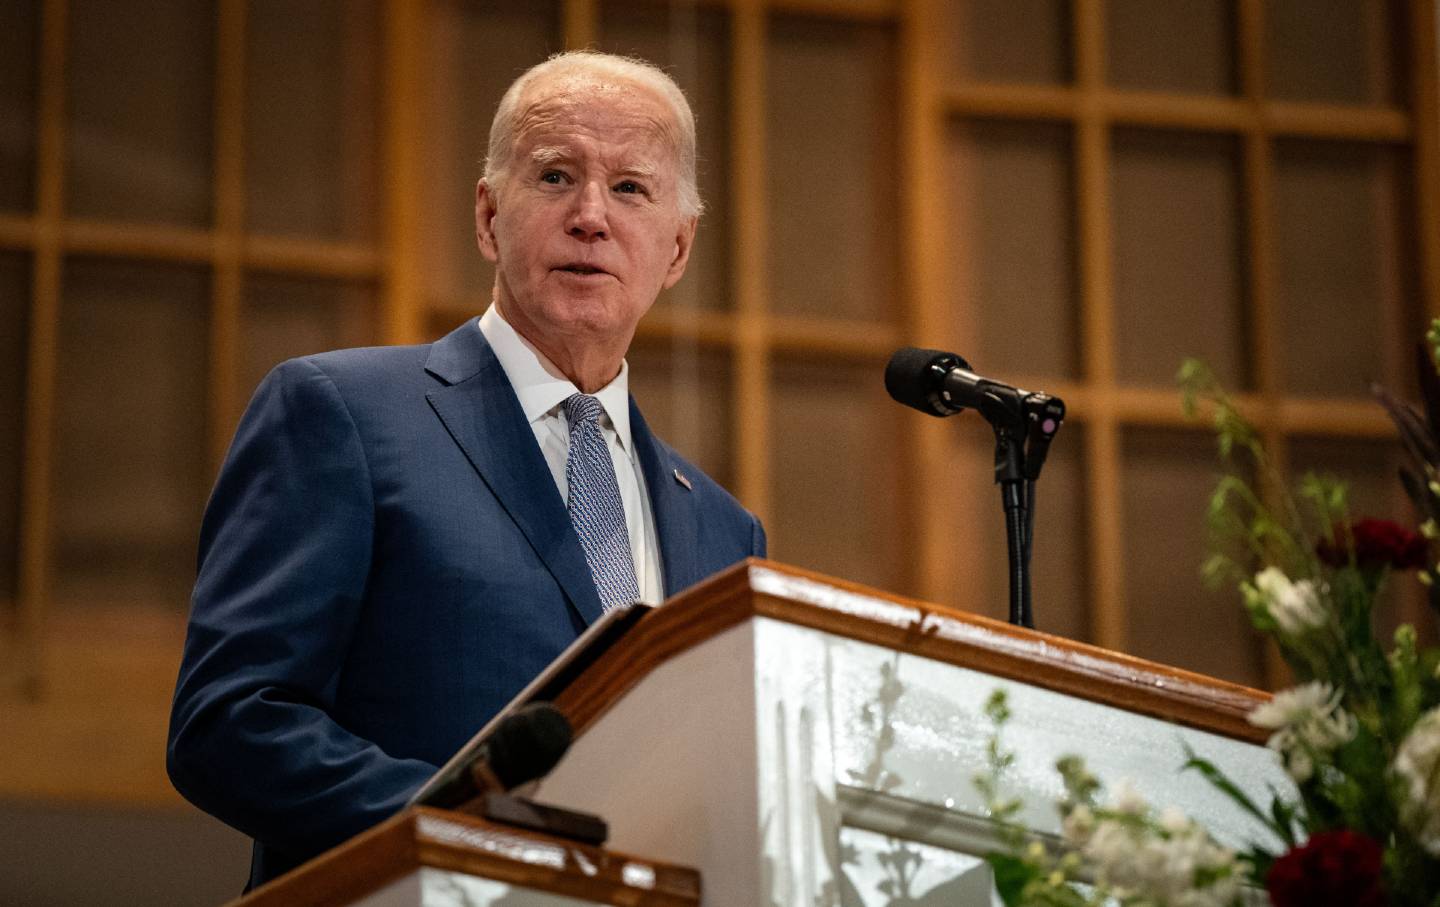 President Joe Biden at the pulpit of the St. John Baptist Church